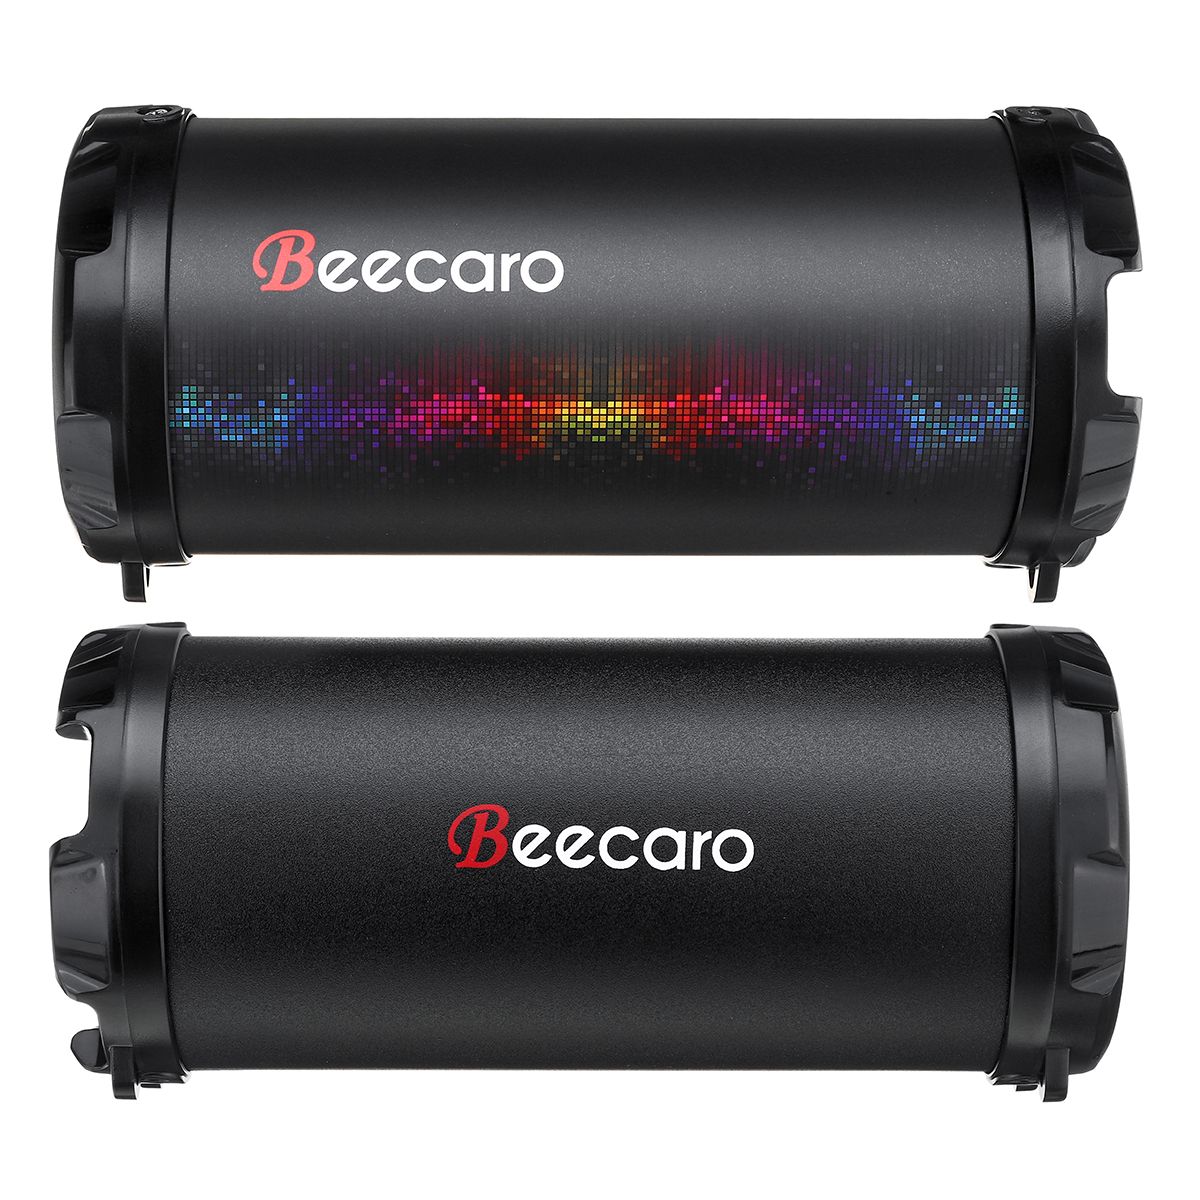 Beecaro-S41B-Portable-Outdoor-bluetooth-Stereo-Bass-Speaker-with-1200mAh-Battery-Support-FM-Radio-Mi-1631217